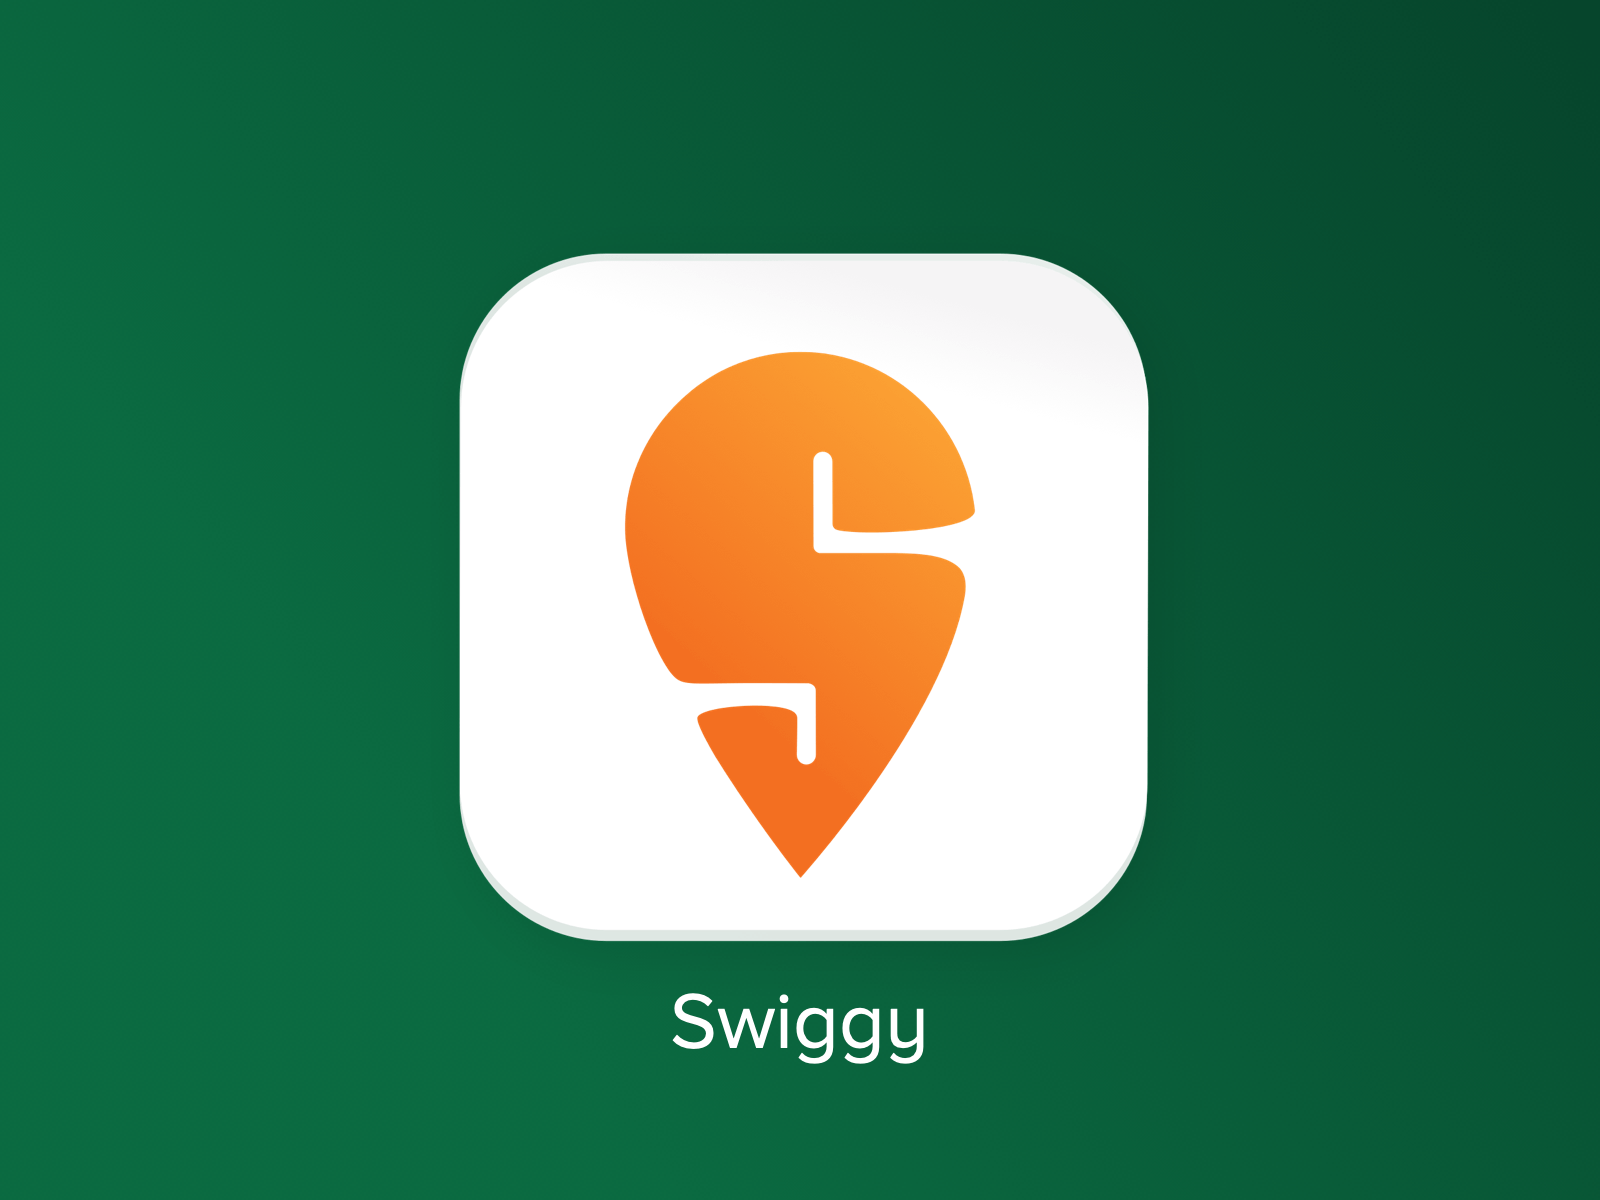 Xmas app icon for Swiggy